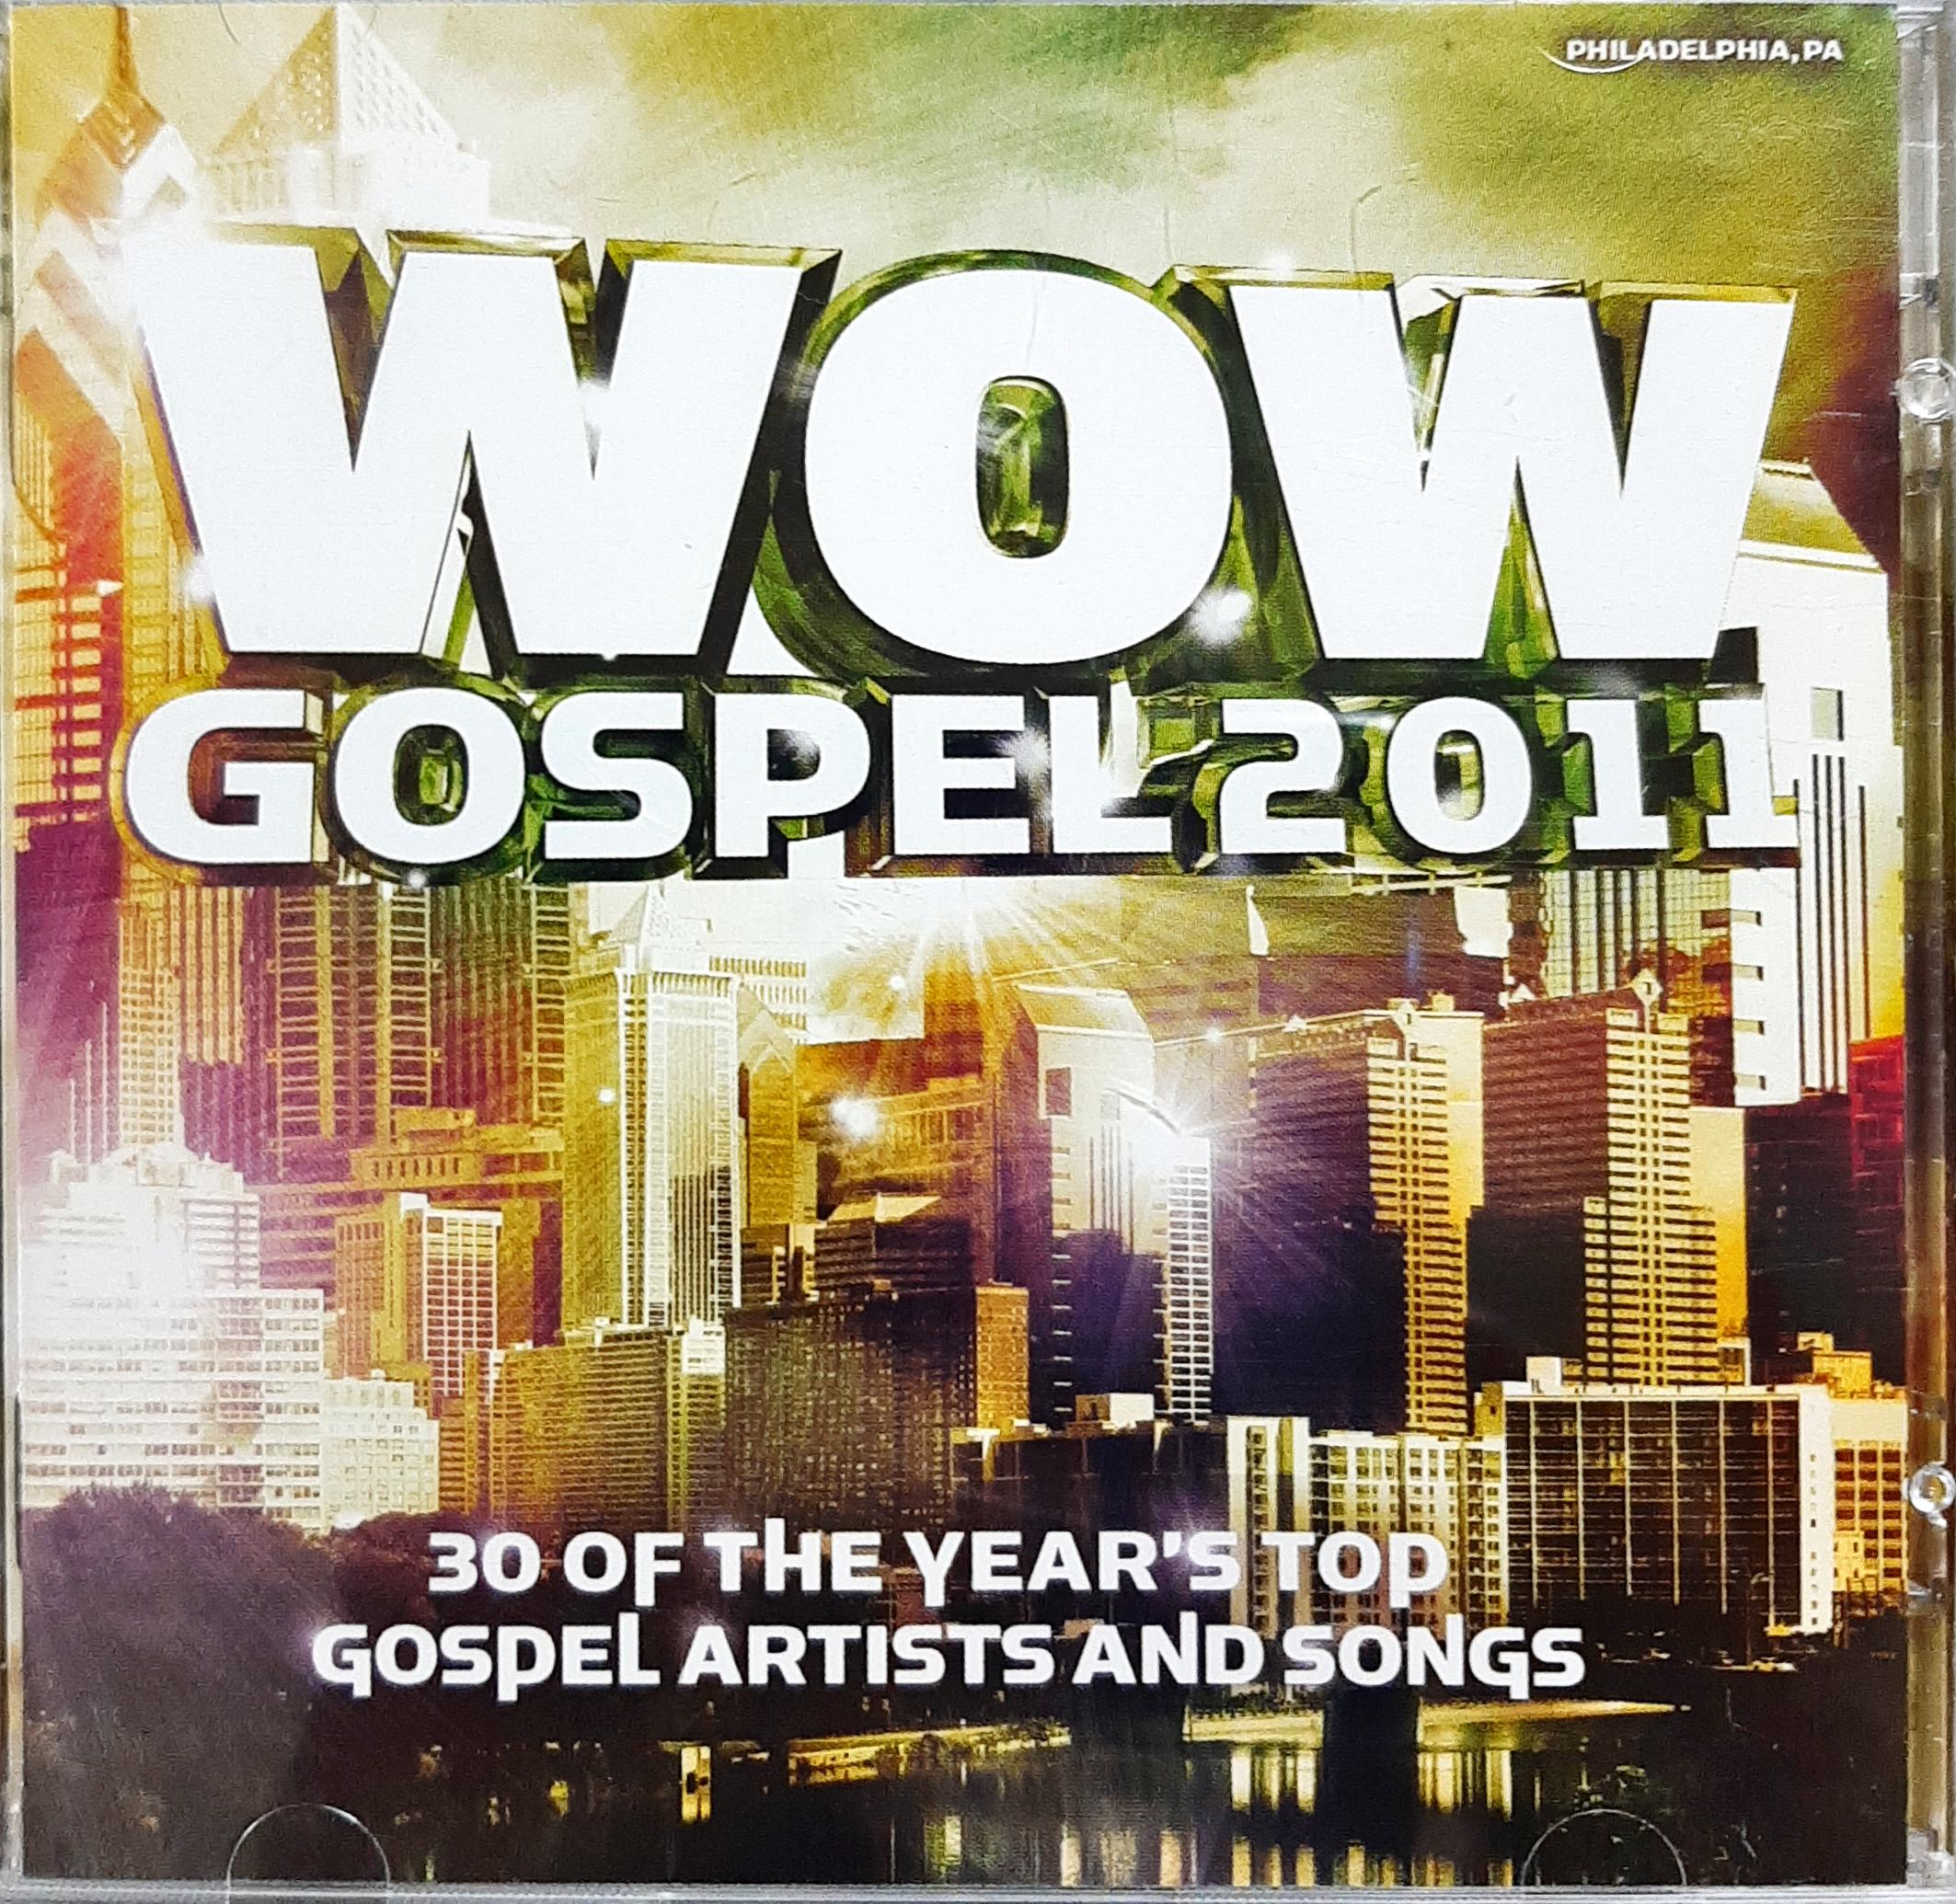 Wow Gospel 2011